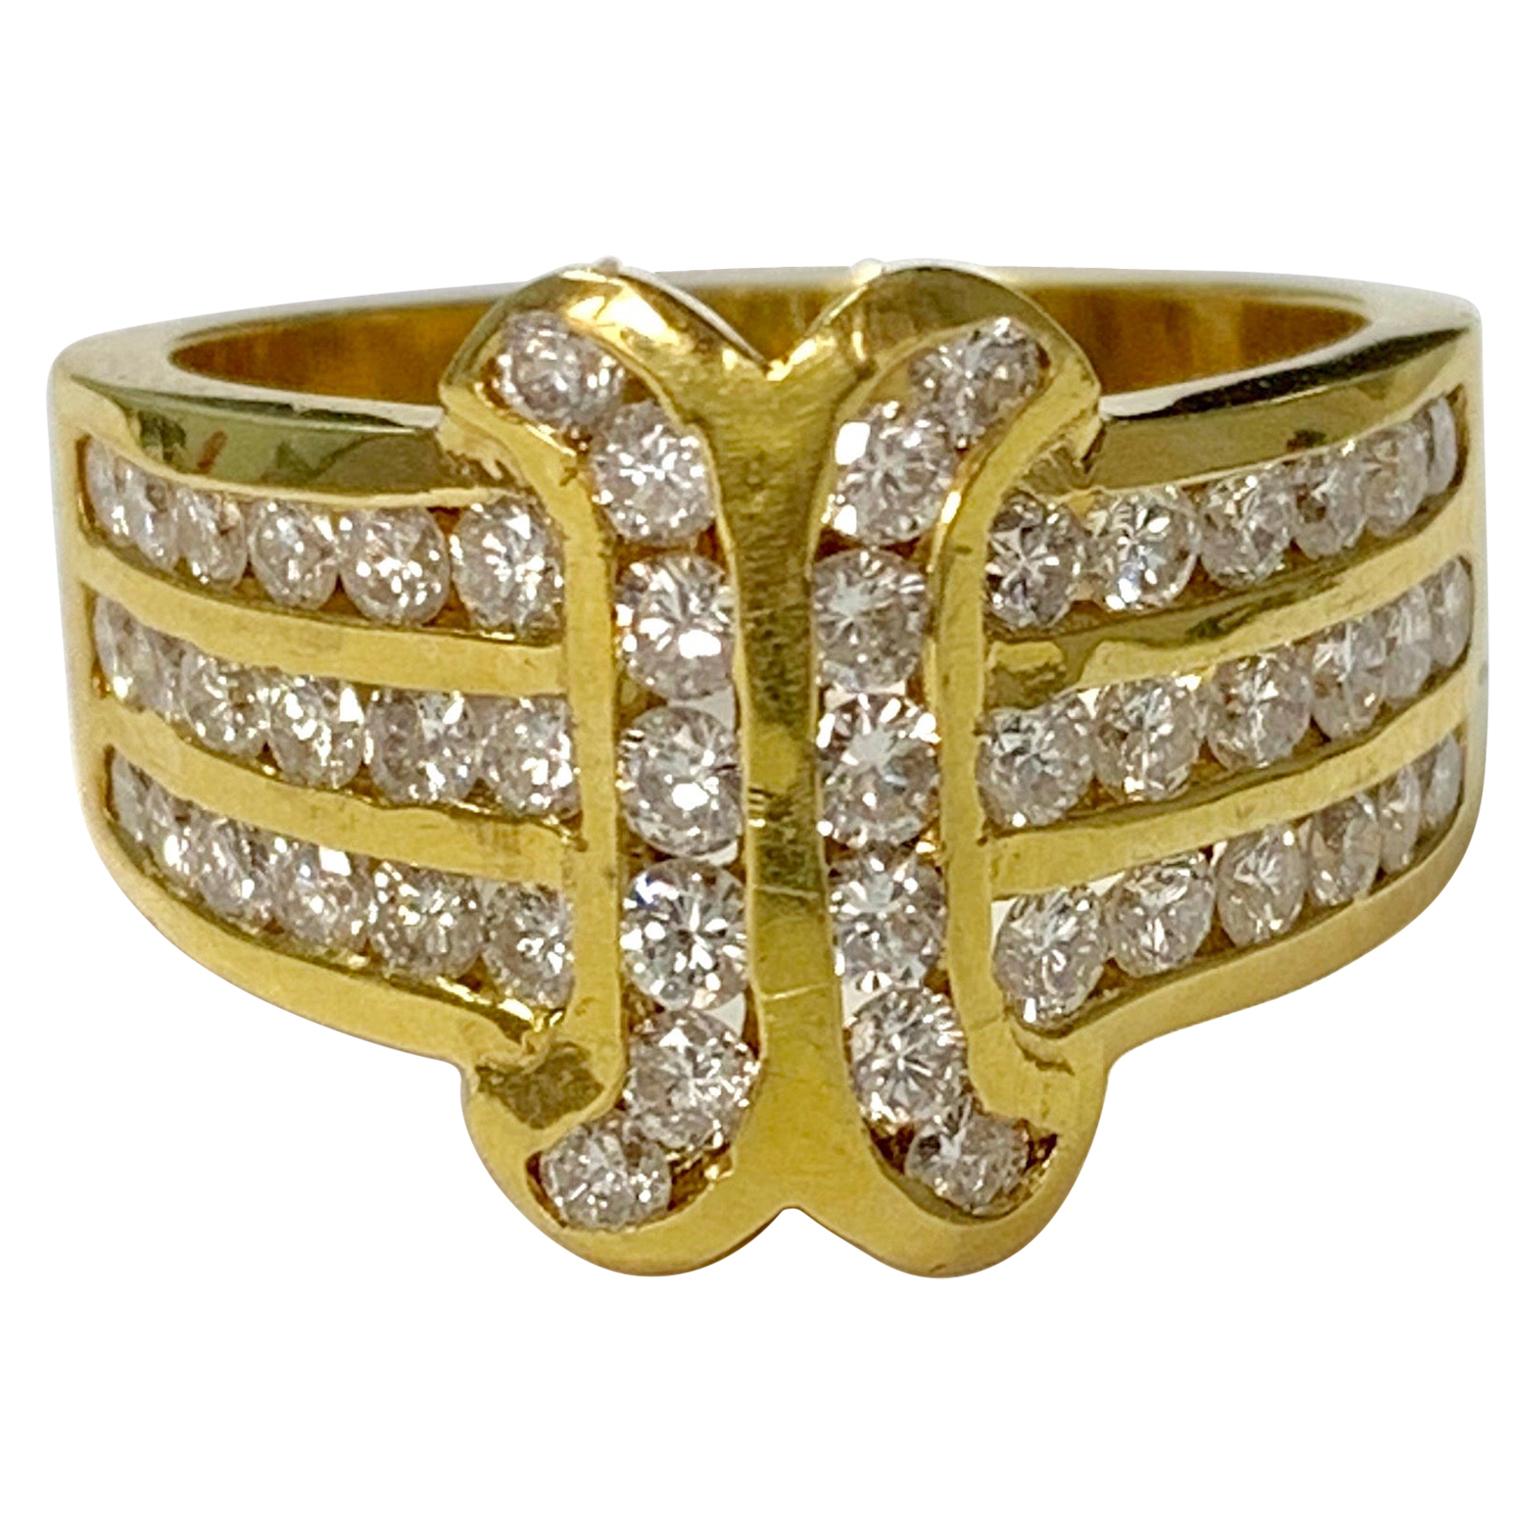 White Diamond Ring in 18K Yellow Gold